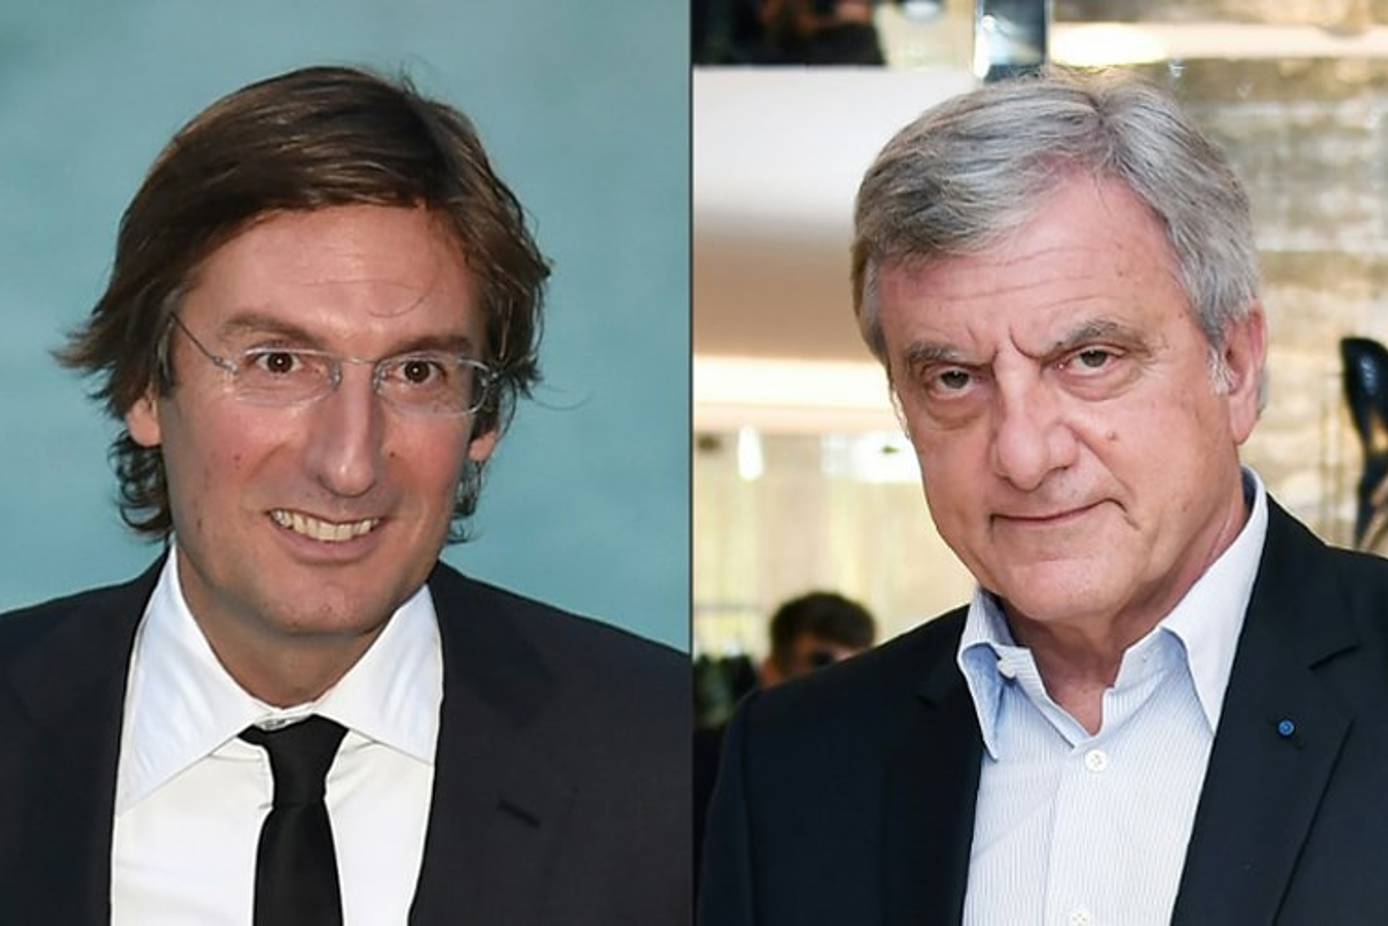 Pietro Beccari to replace Sidney Toledano as Christian Dior CEO